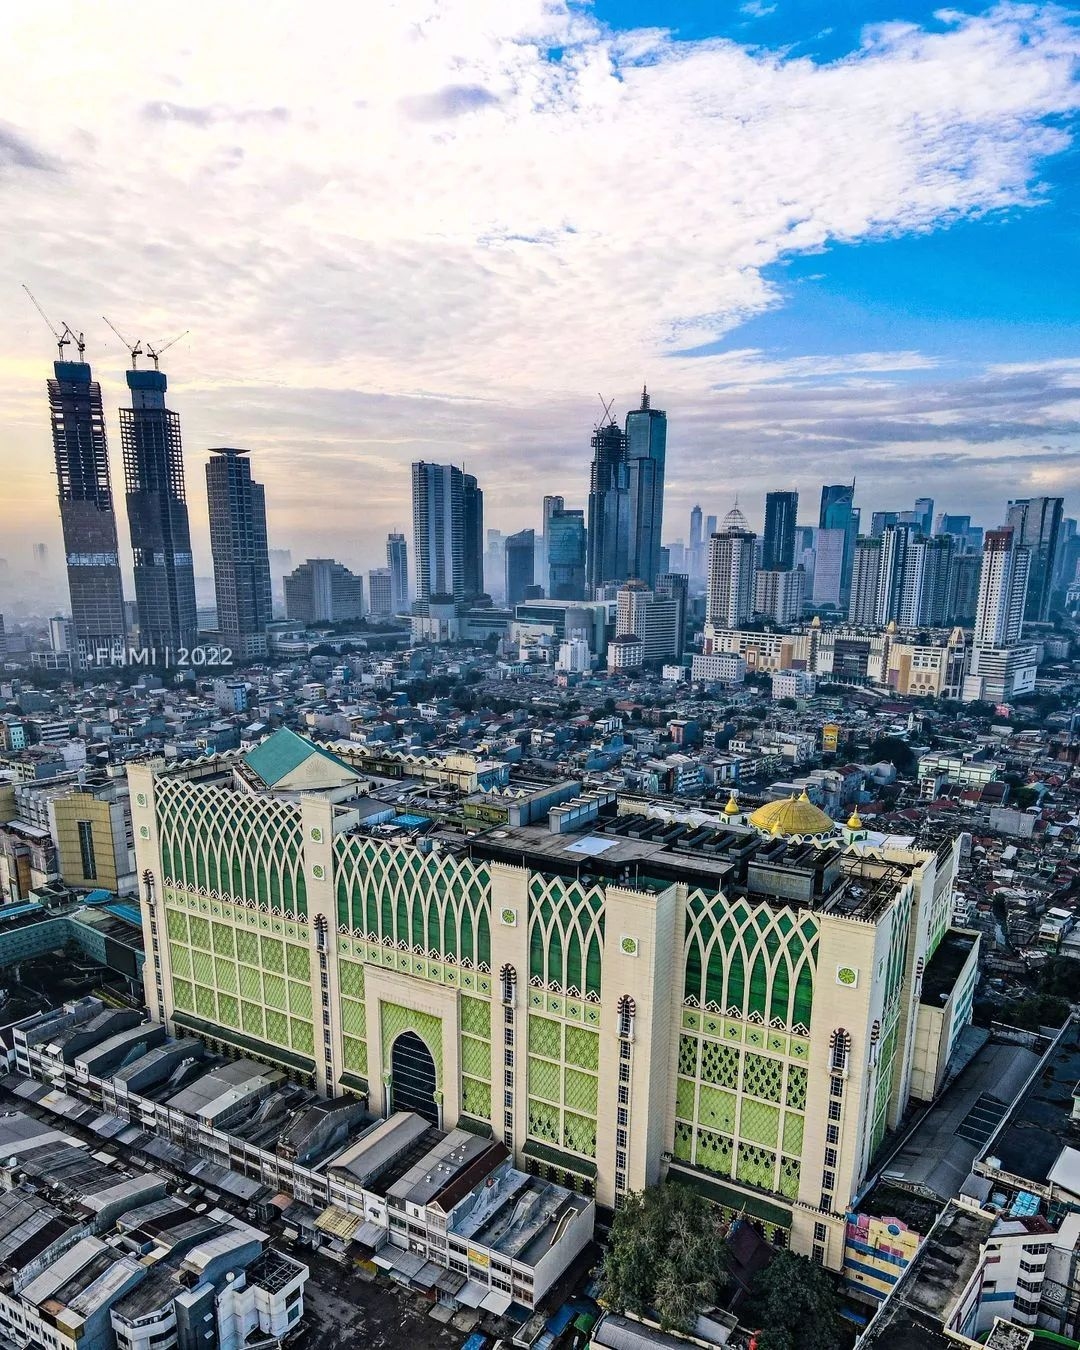 Pusat grosir di Jakarta